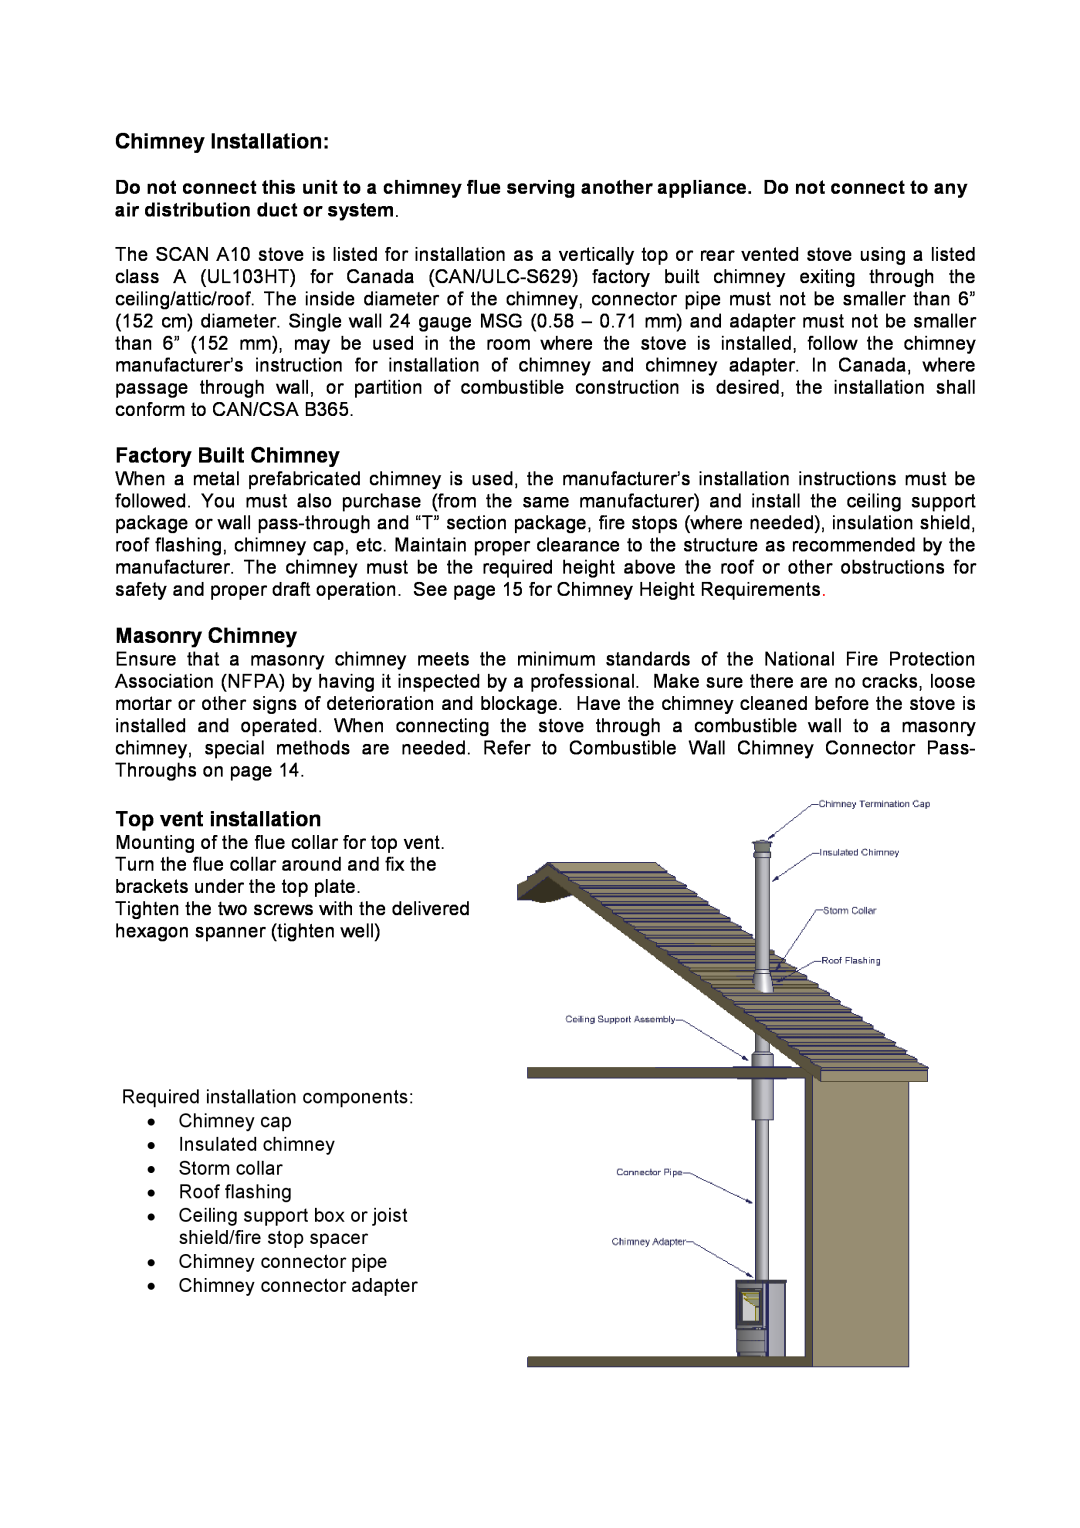 Omnitron Systems Technology A10 manual Chimney Installation, Factory Built Chimney, Masonry Chimney, Top vent installation 